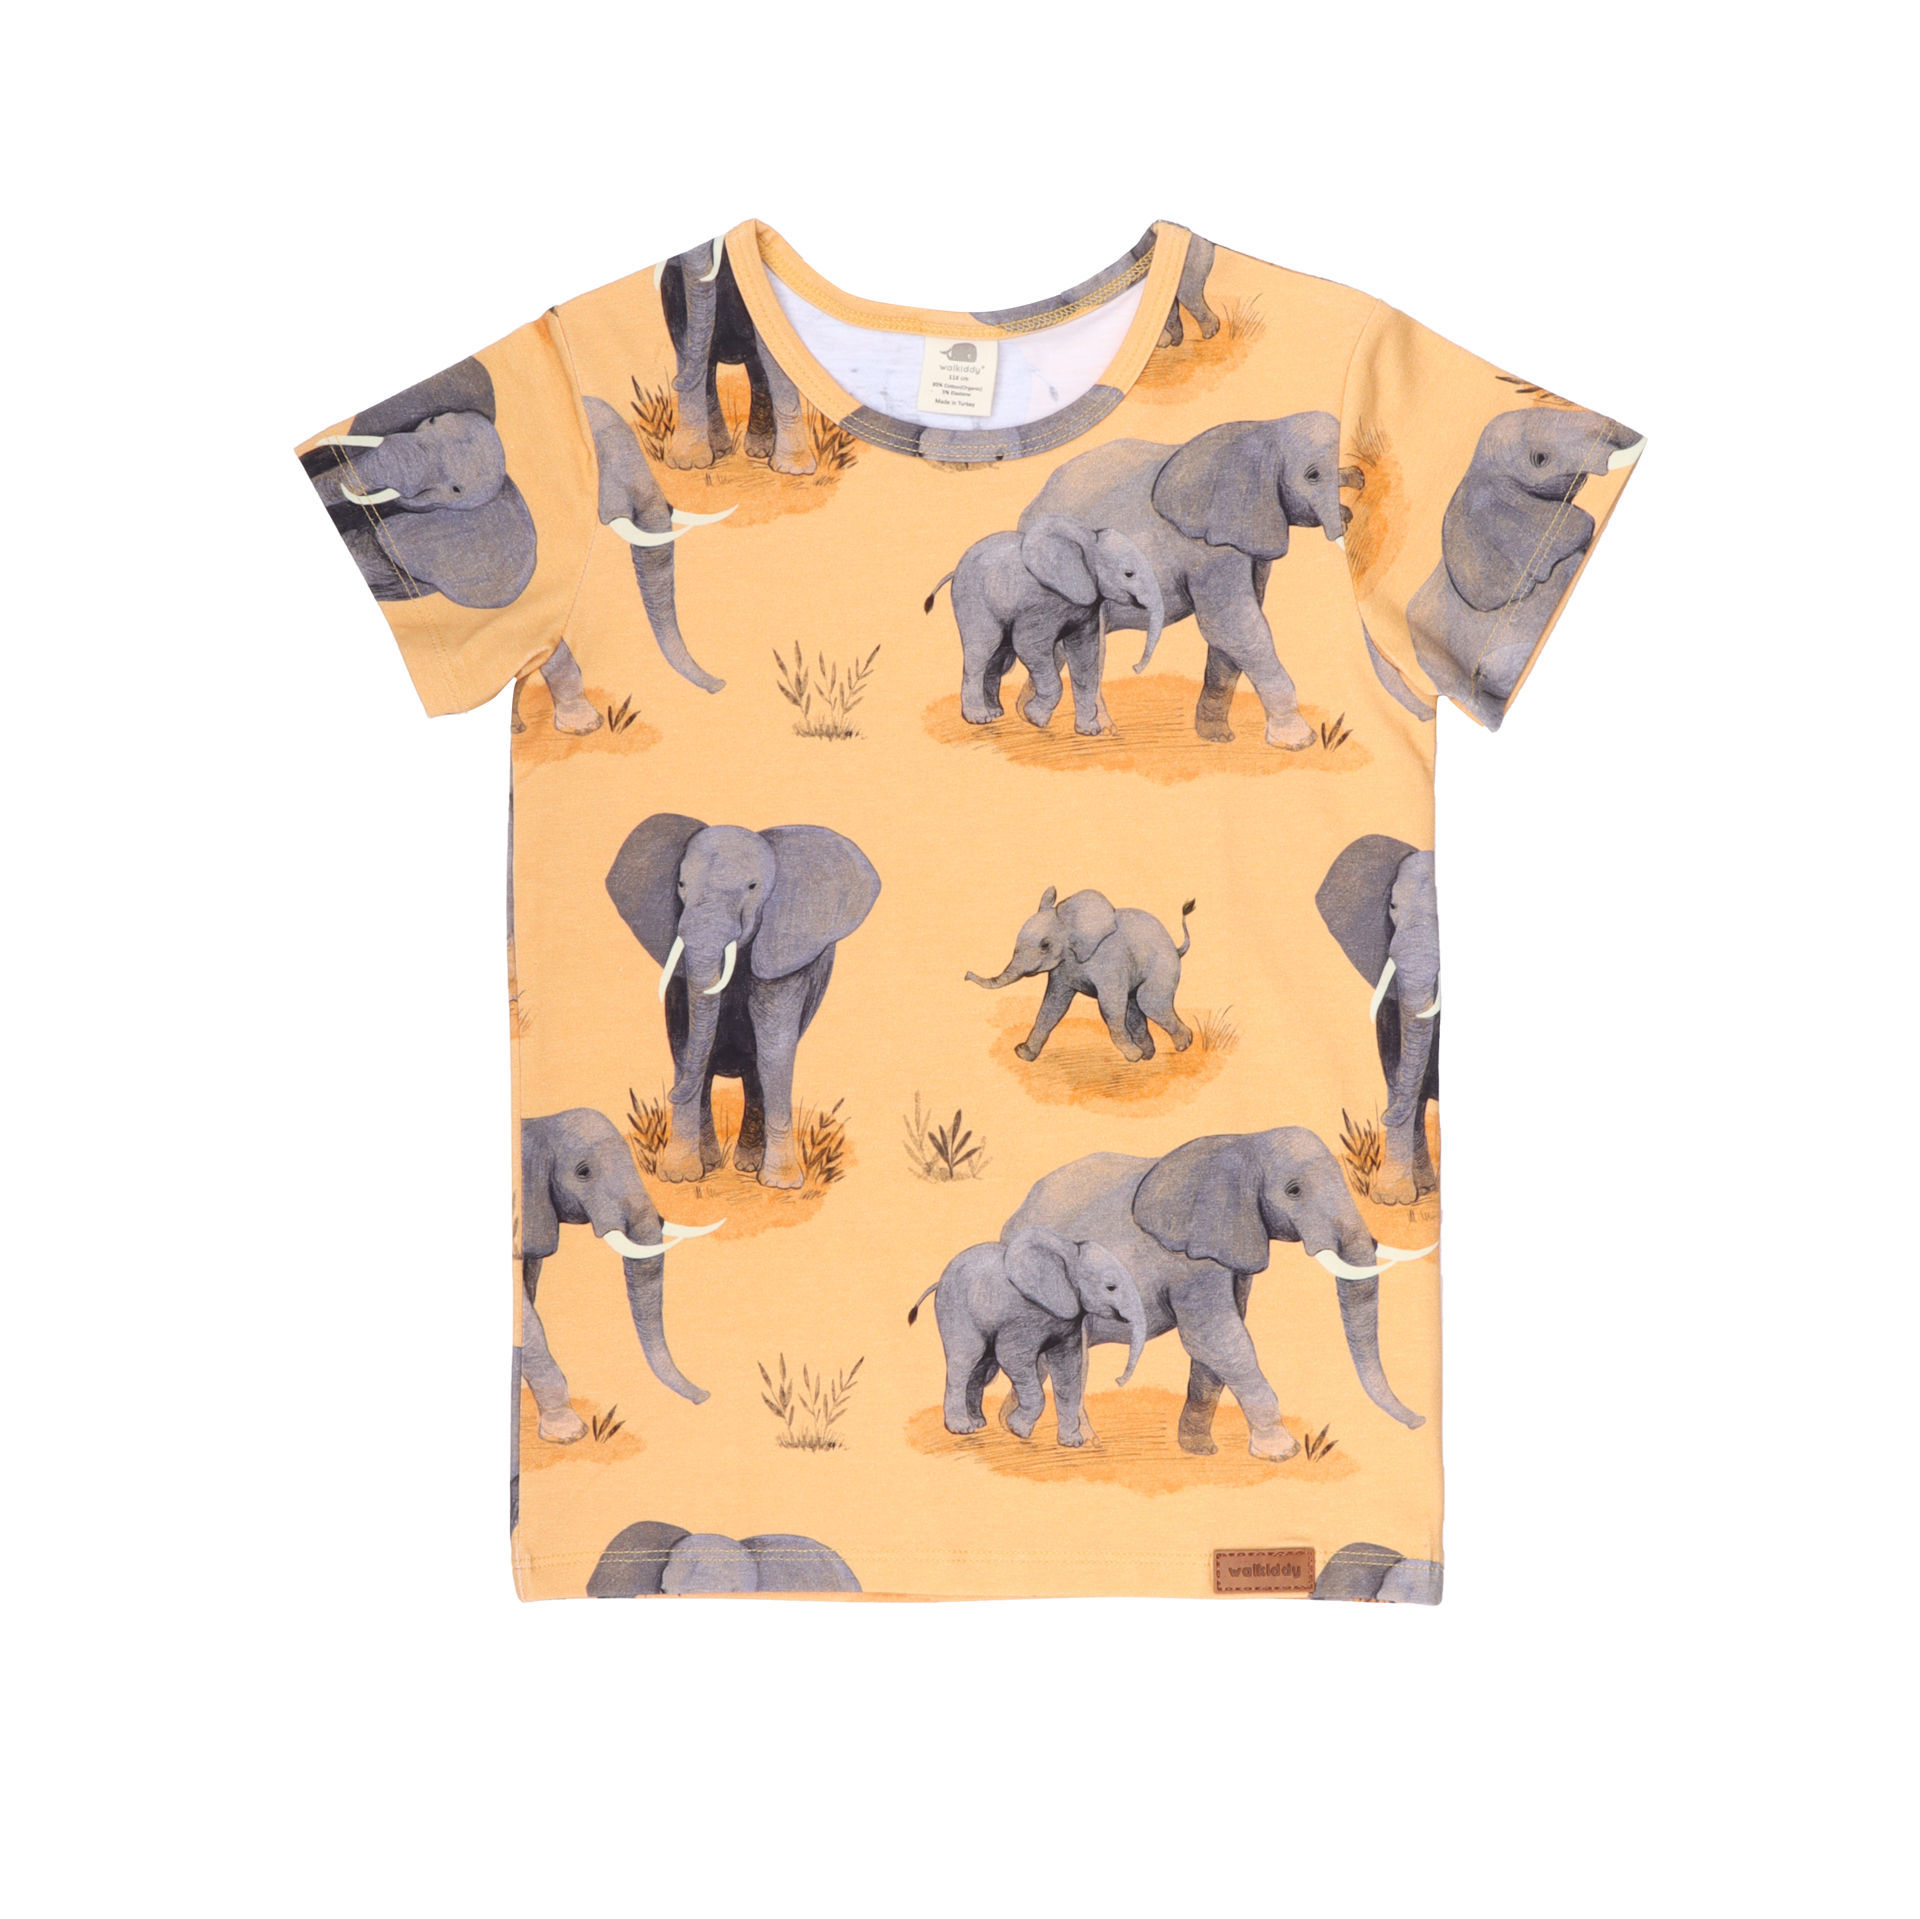 Walkiddy T-Shirt Elephant Family